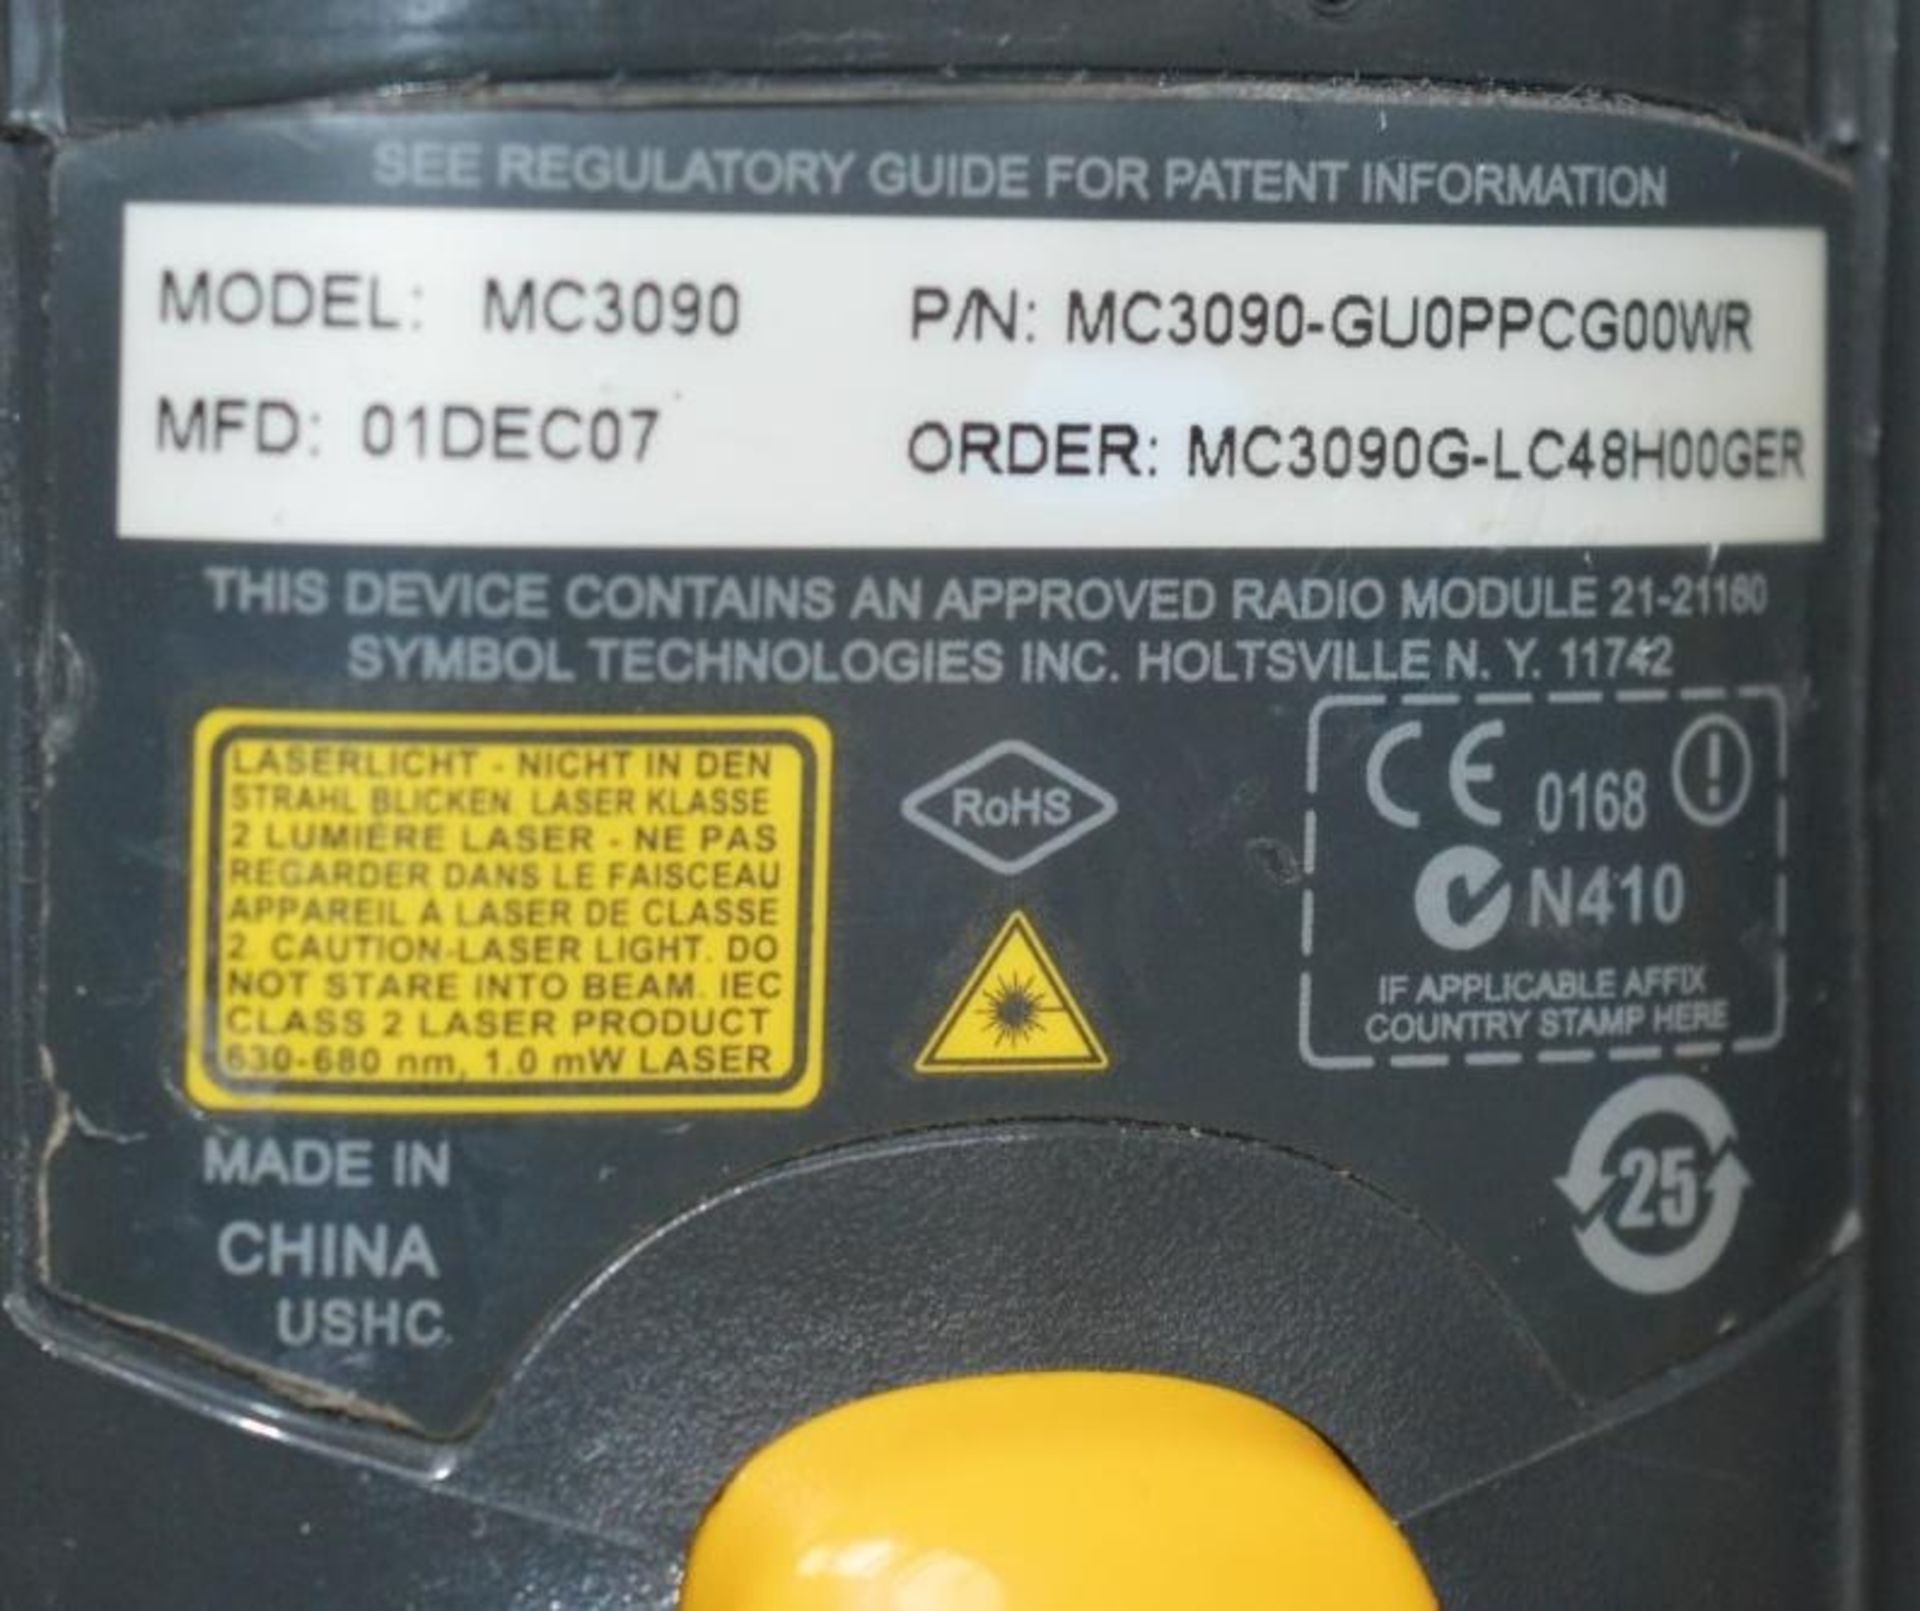 4 x Motorola Symbol MC3090 Handheld Barcode Scanners - Mobile Computer PDA - Includes Charging Dock, - Image 5 of 7